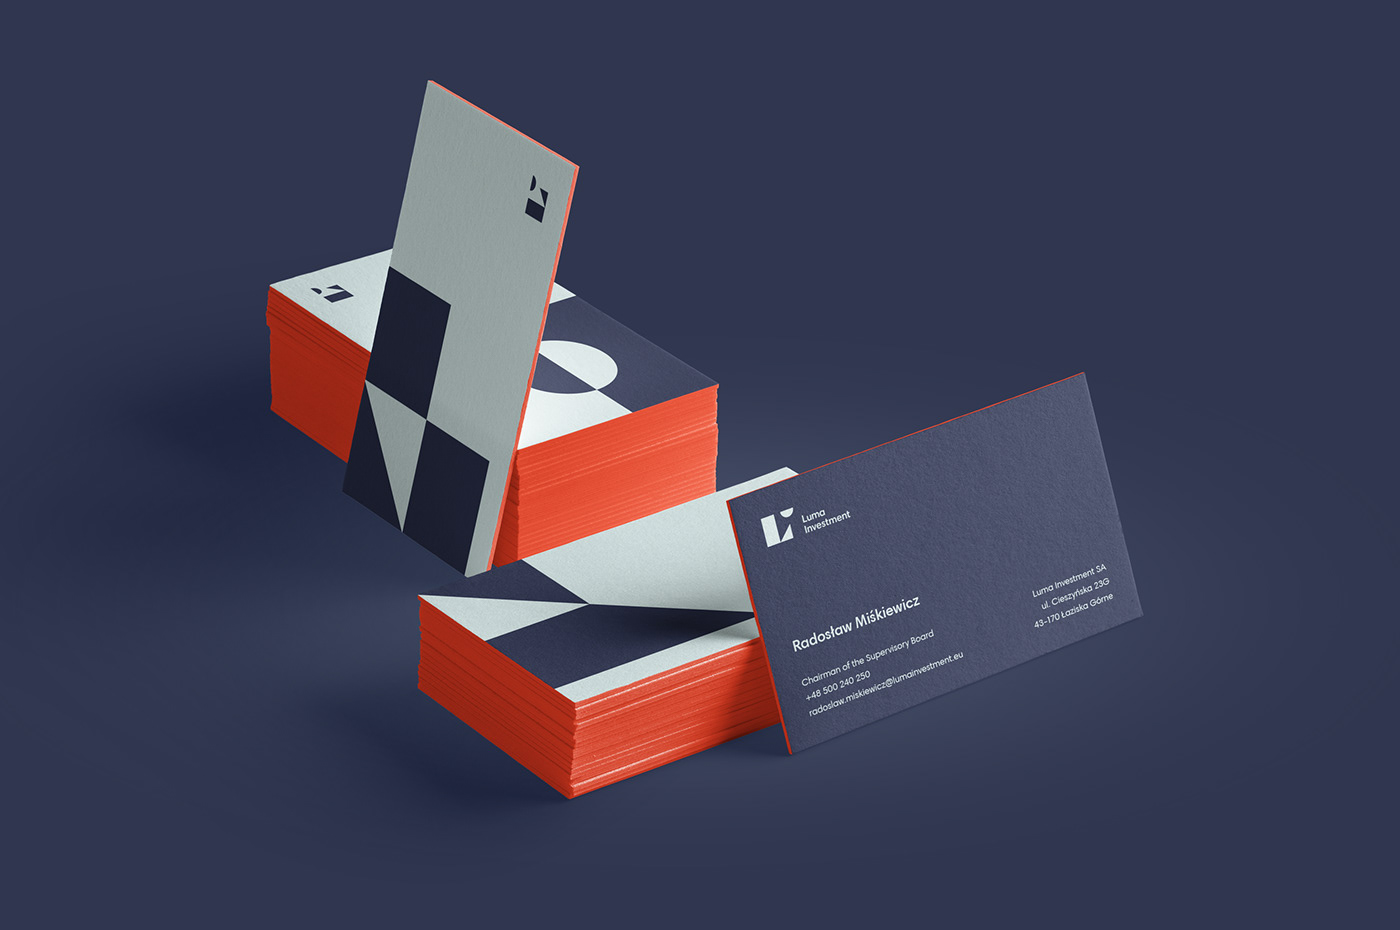 luma venture capital Webdesign UI minimal modernism mondrian abstract geometry